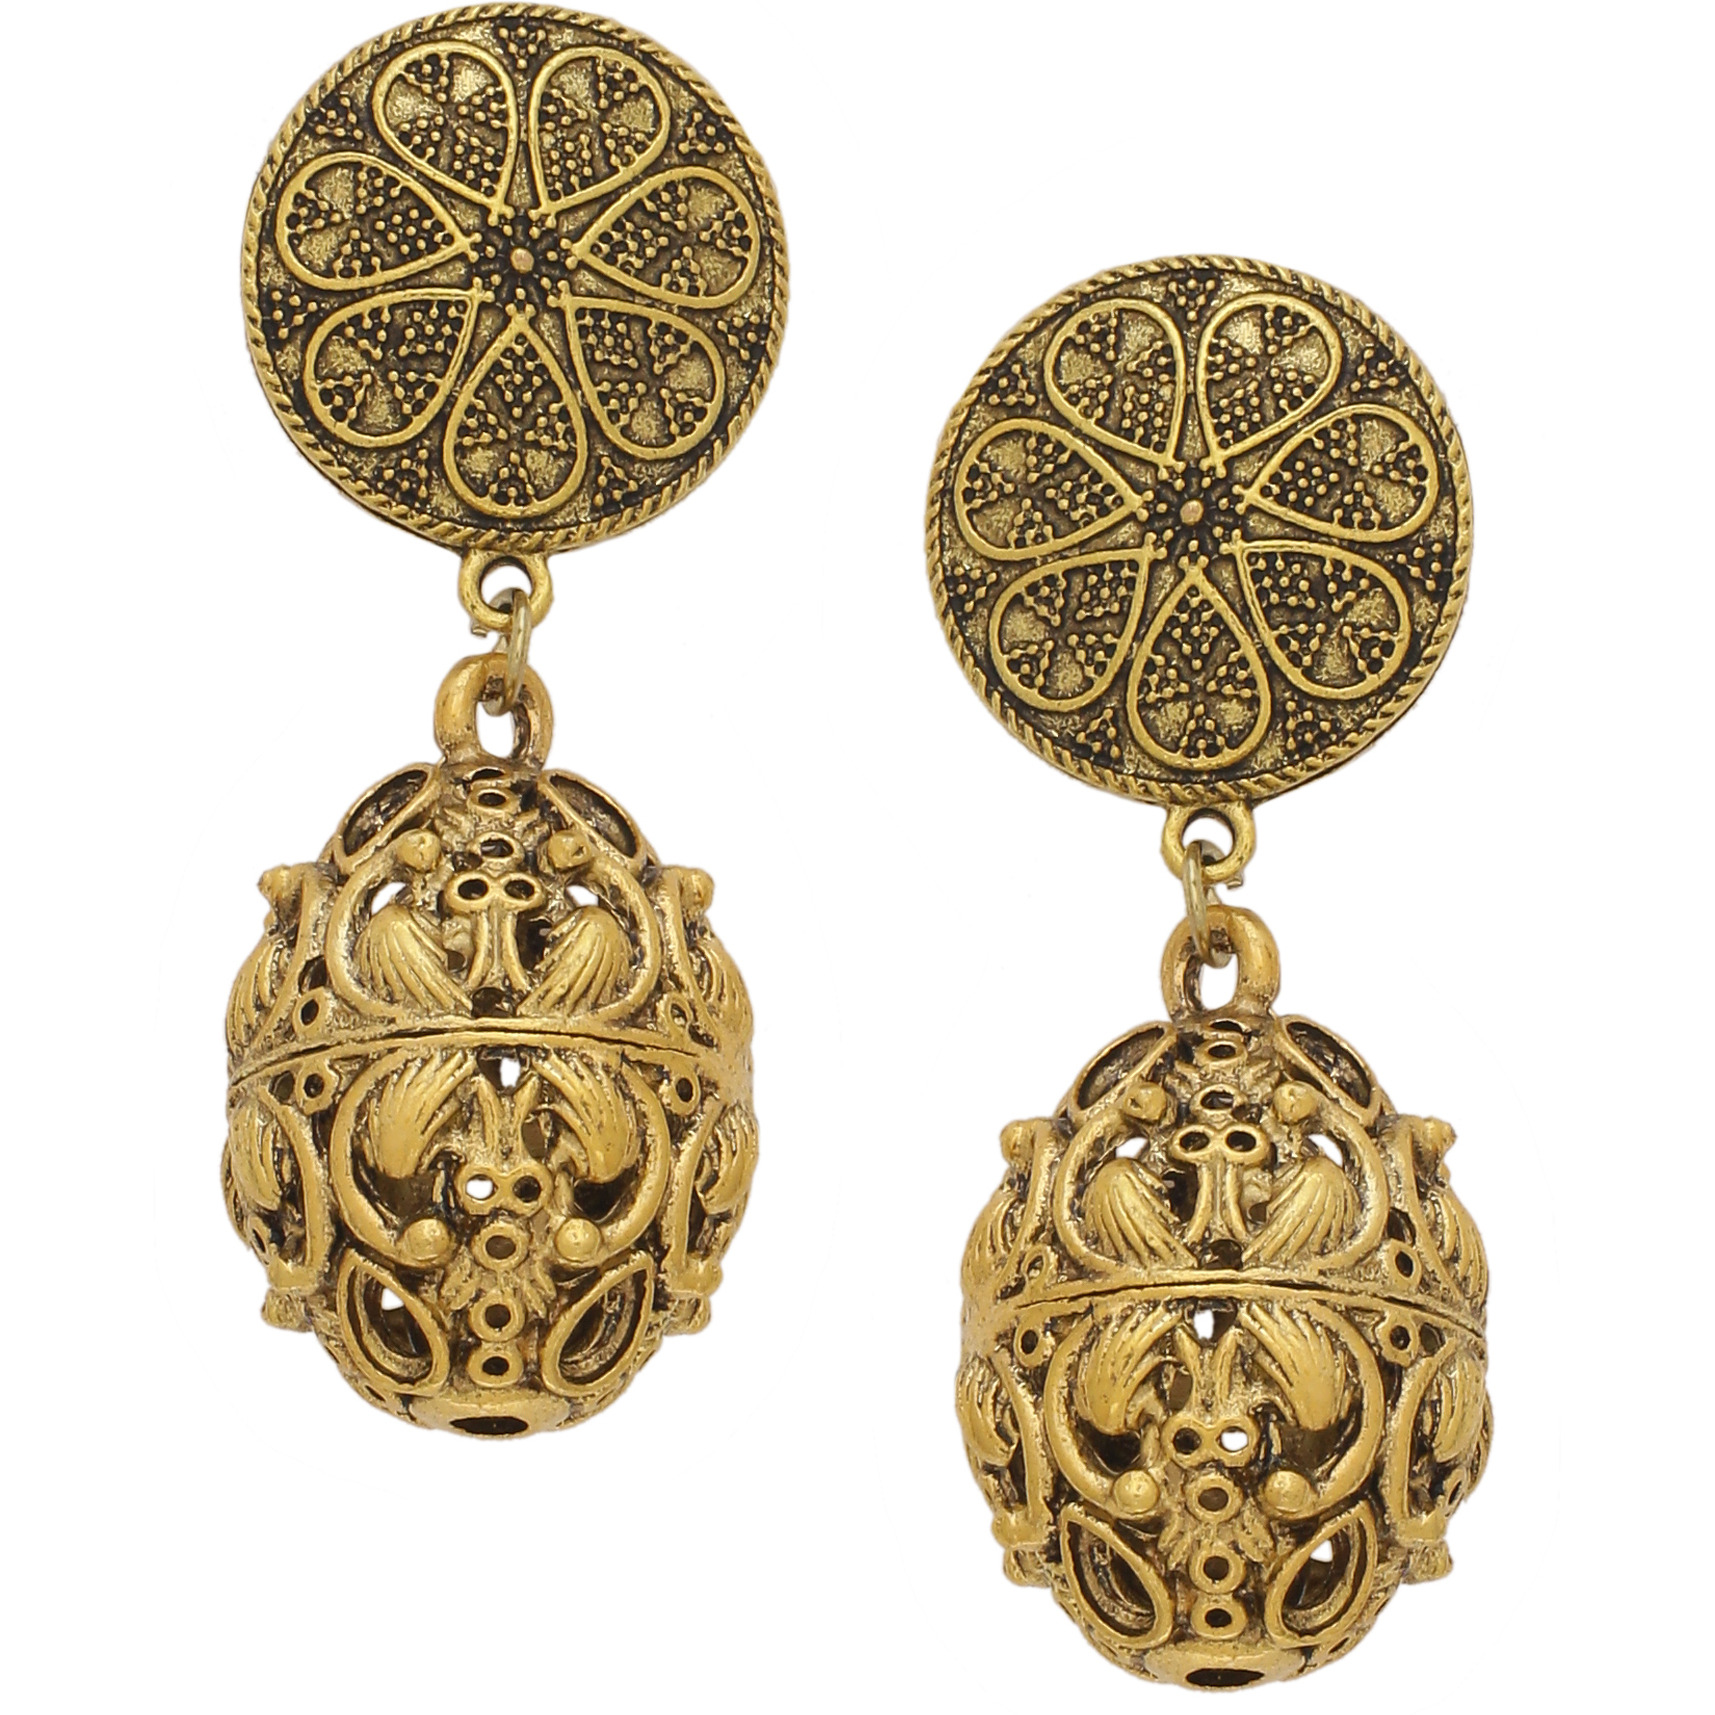 Beautiful Gold Tone Dome Shape Drop Earrings By Silvermerc Designs